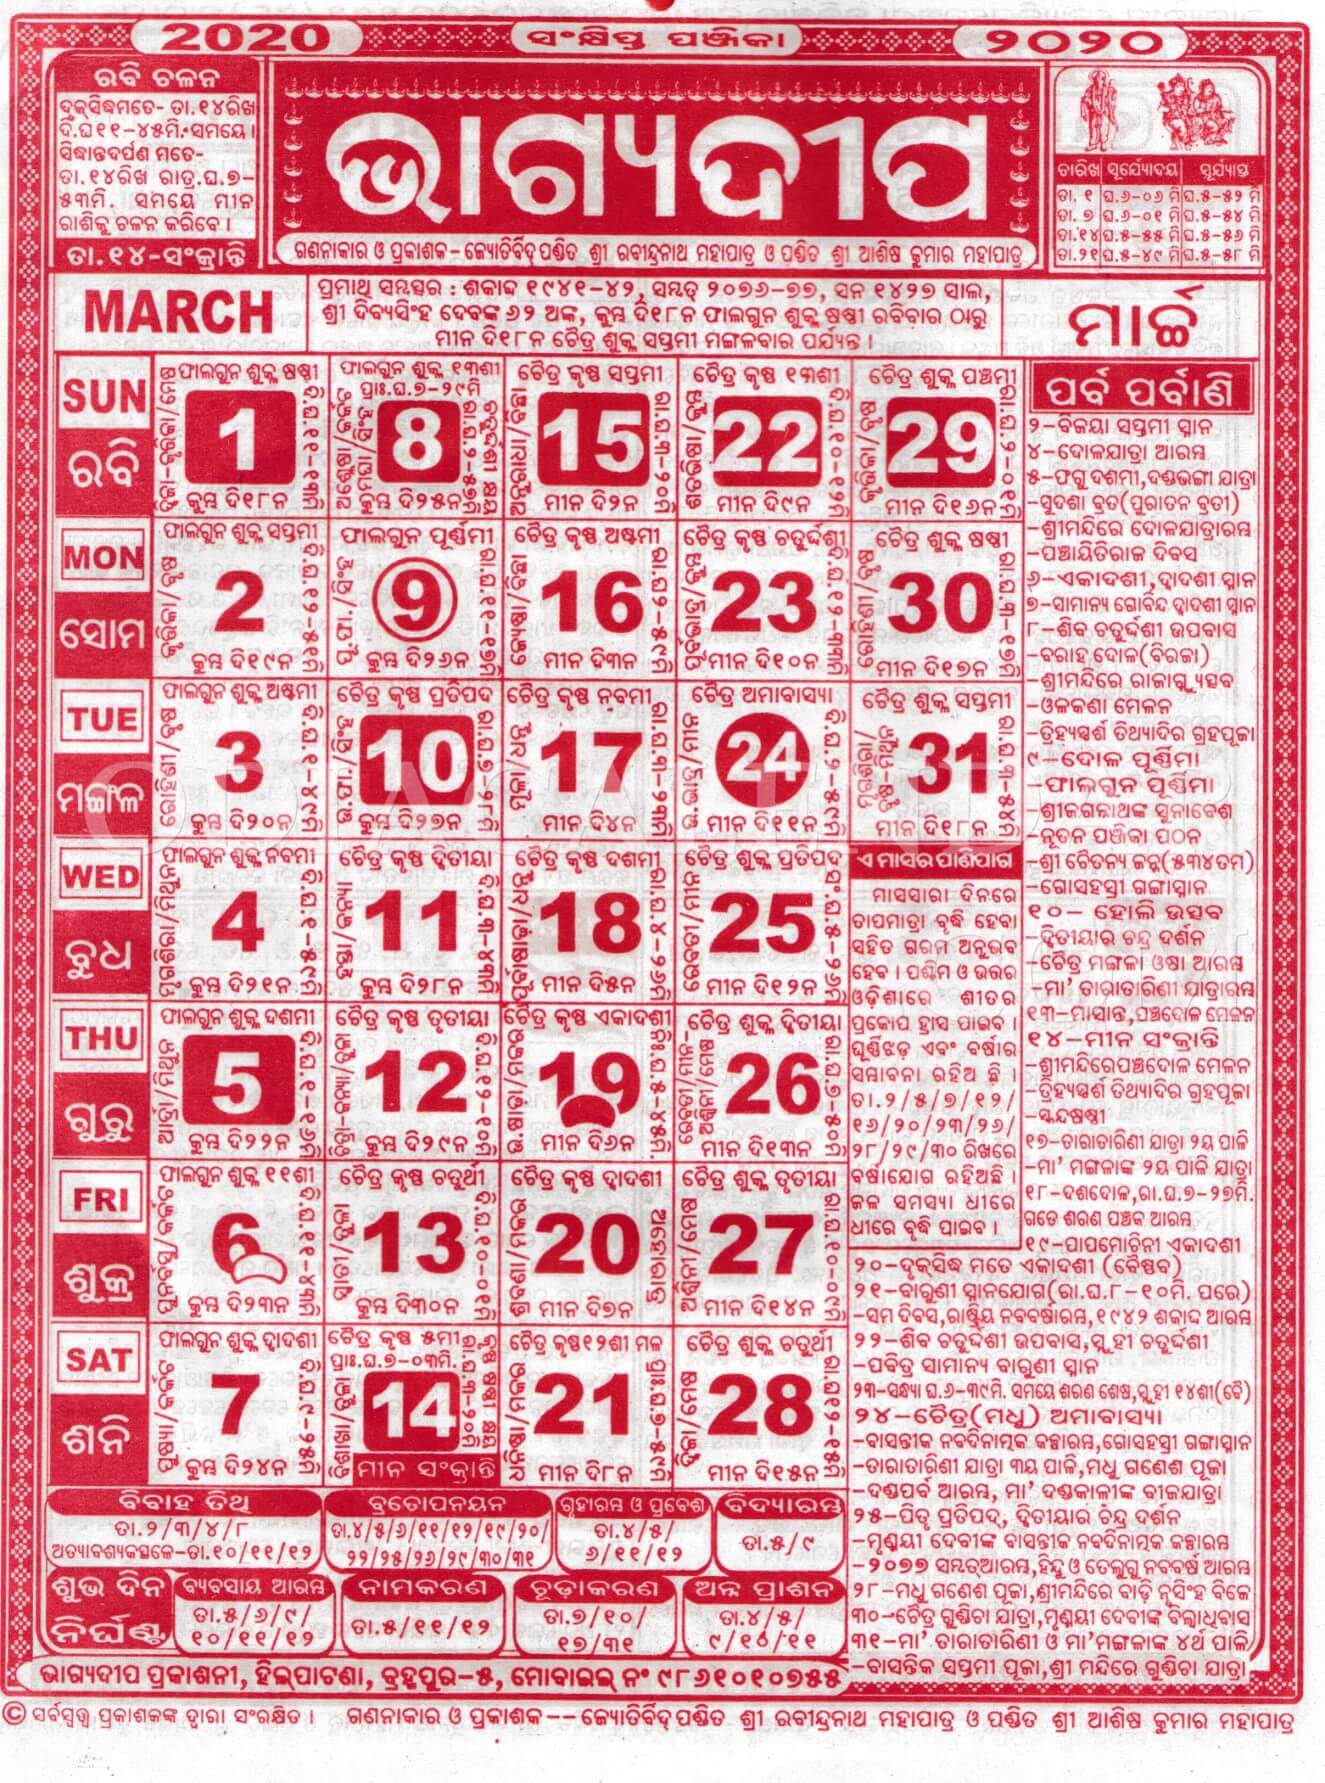 Bhagyadeep Calendar 2020 March